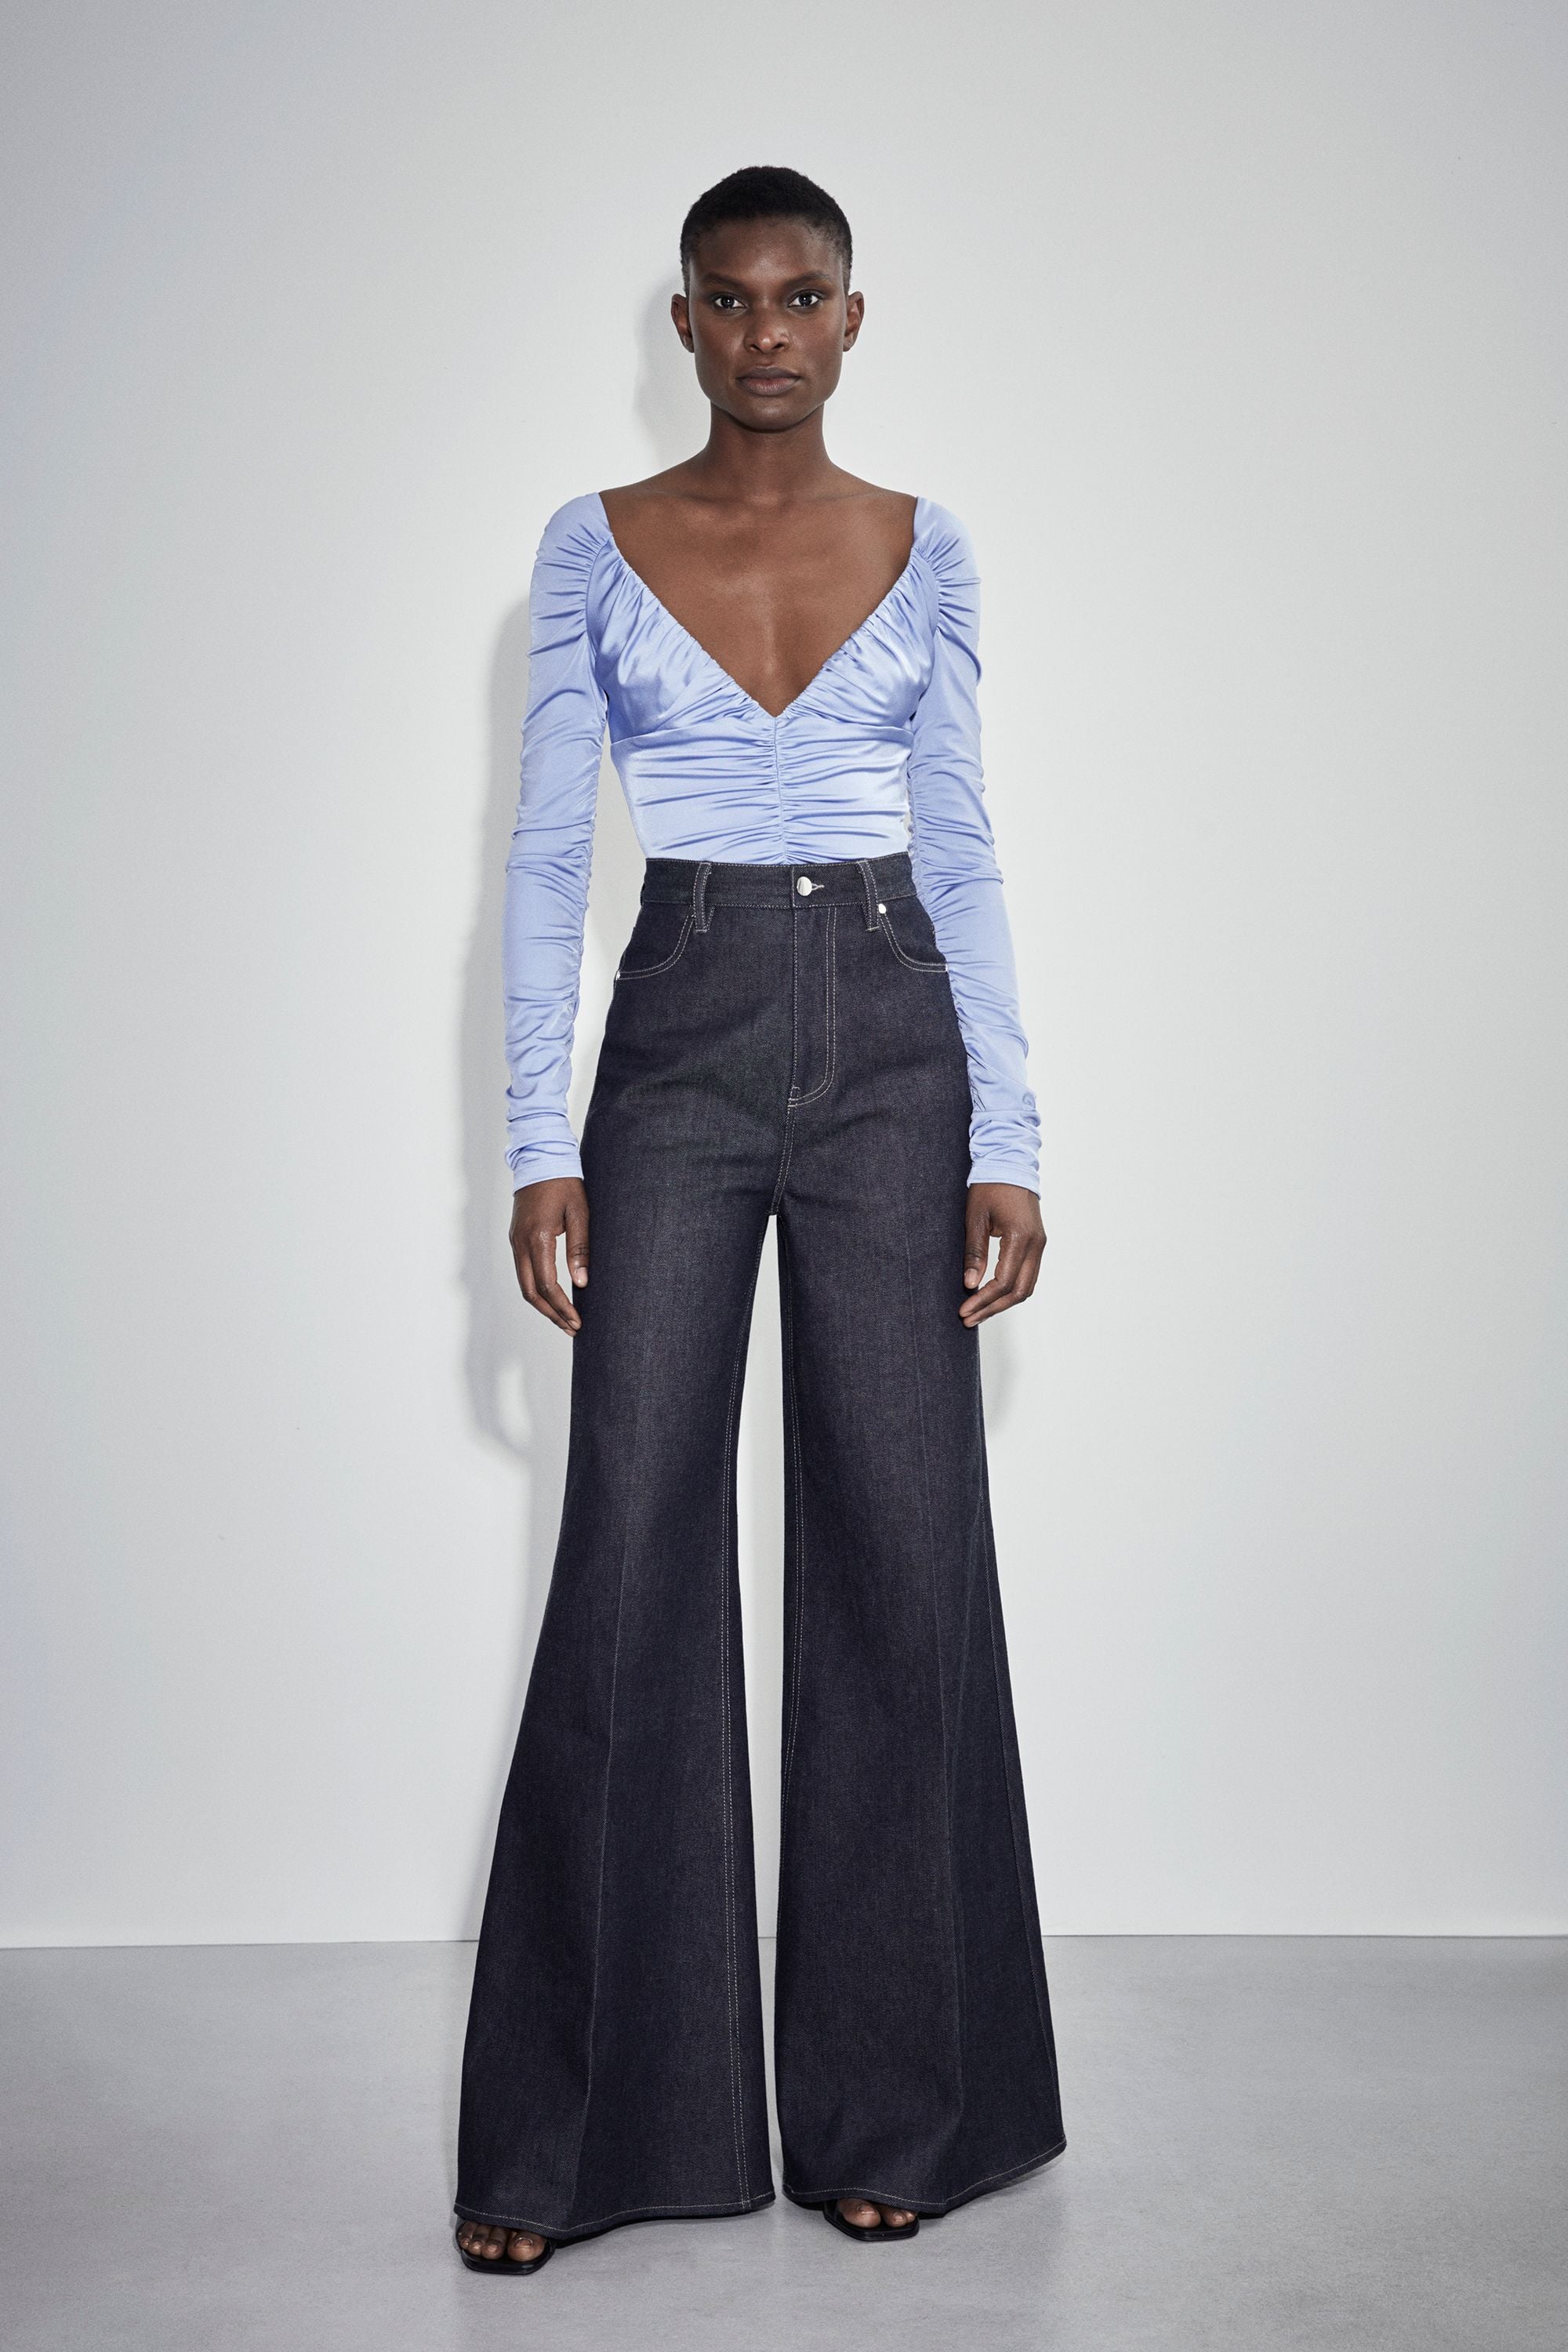 J Lo Embraces '70s in Flared Dark Denim Jeans | Fashion